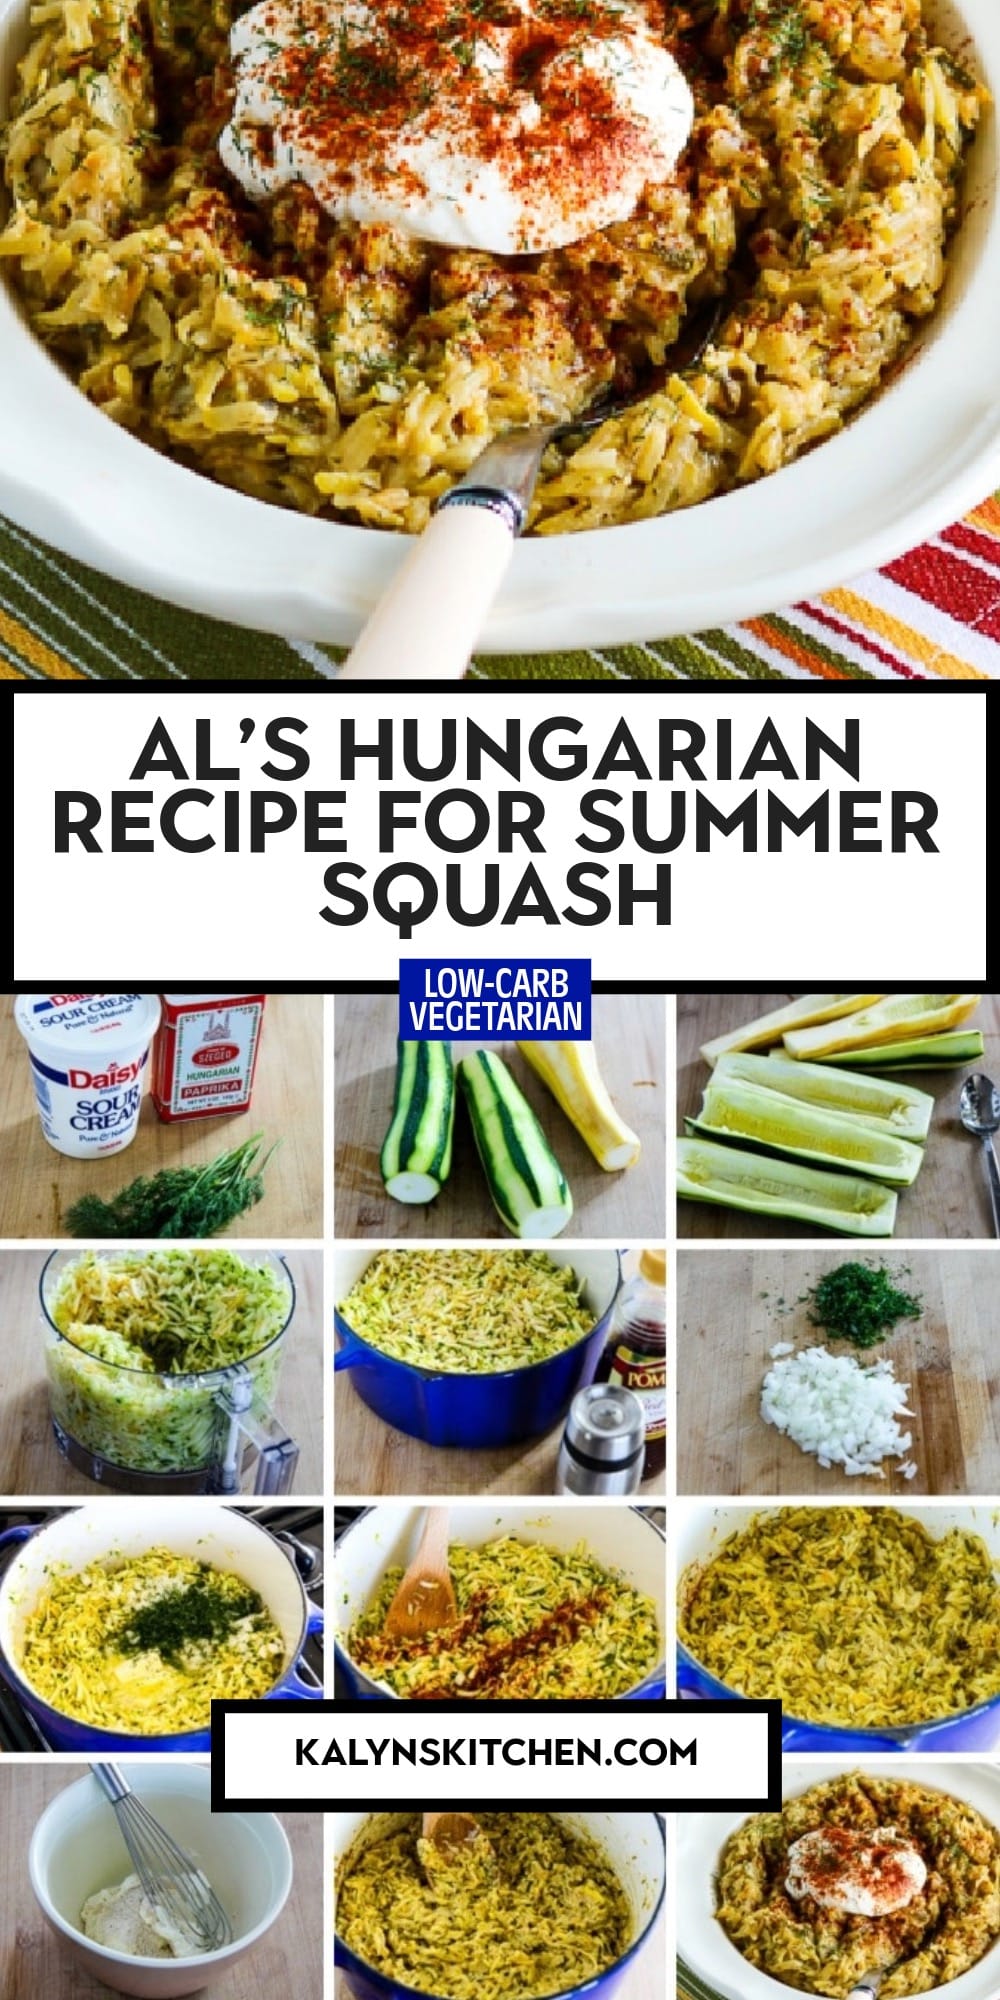 Pinterest image of Al's Hungarian Recipe for Summer Squash